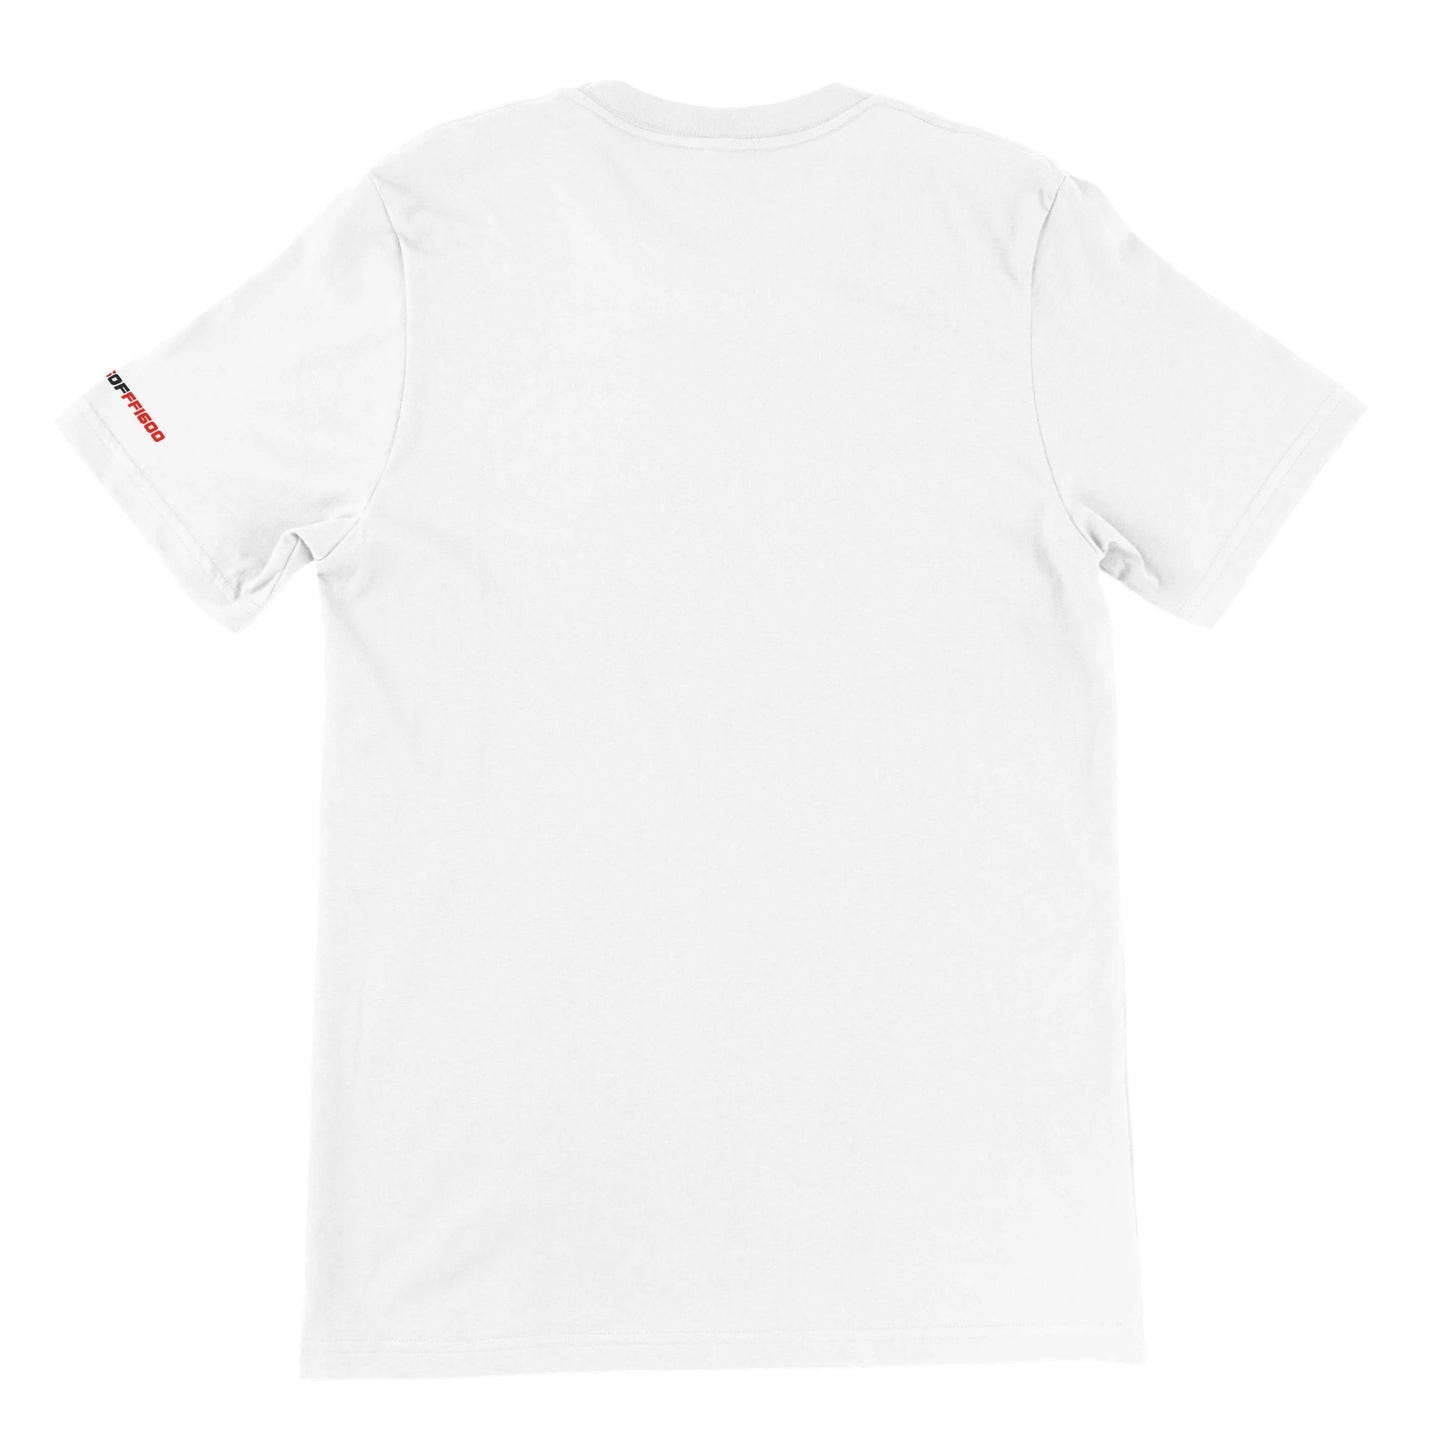 Heroes of FF1600 - Premium Unisex T-shirt (White)